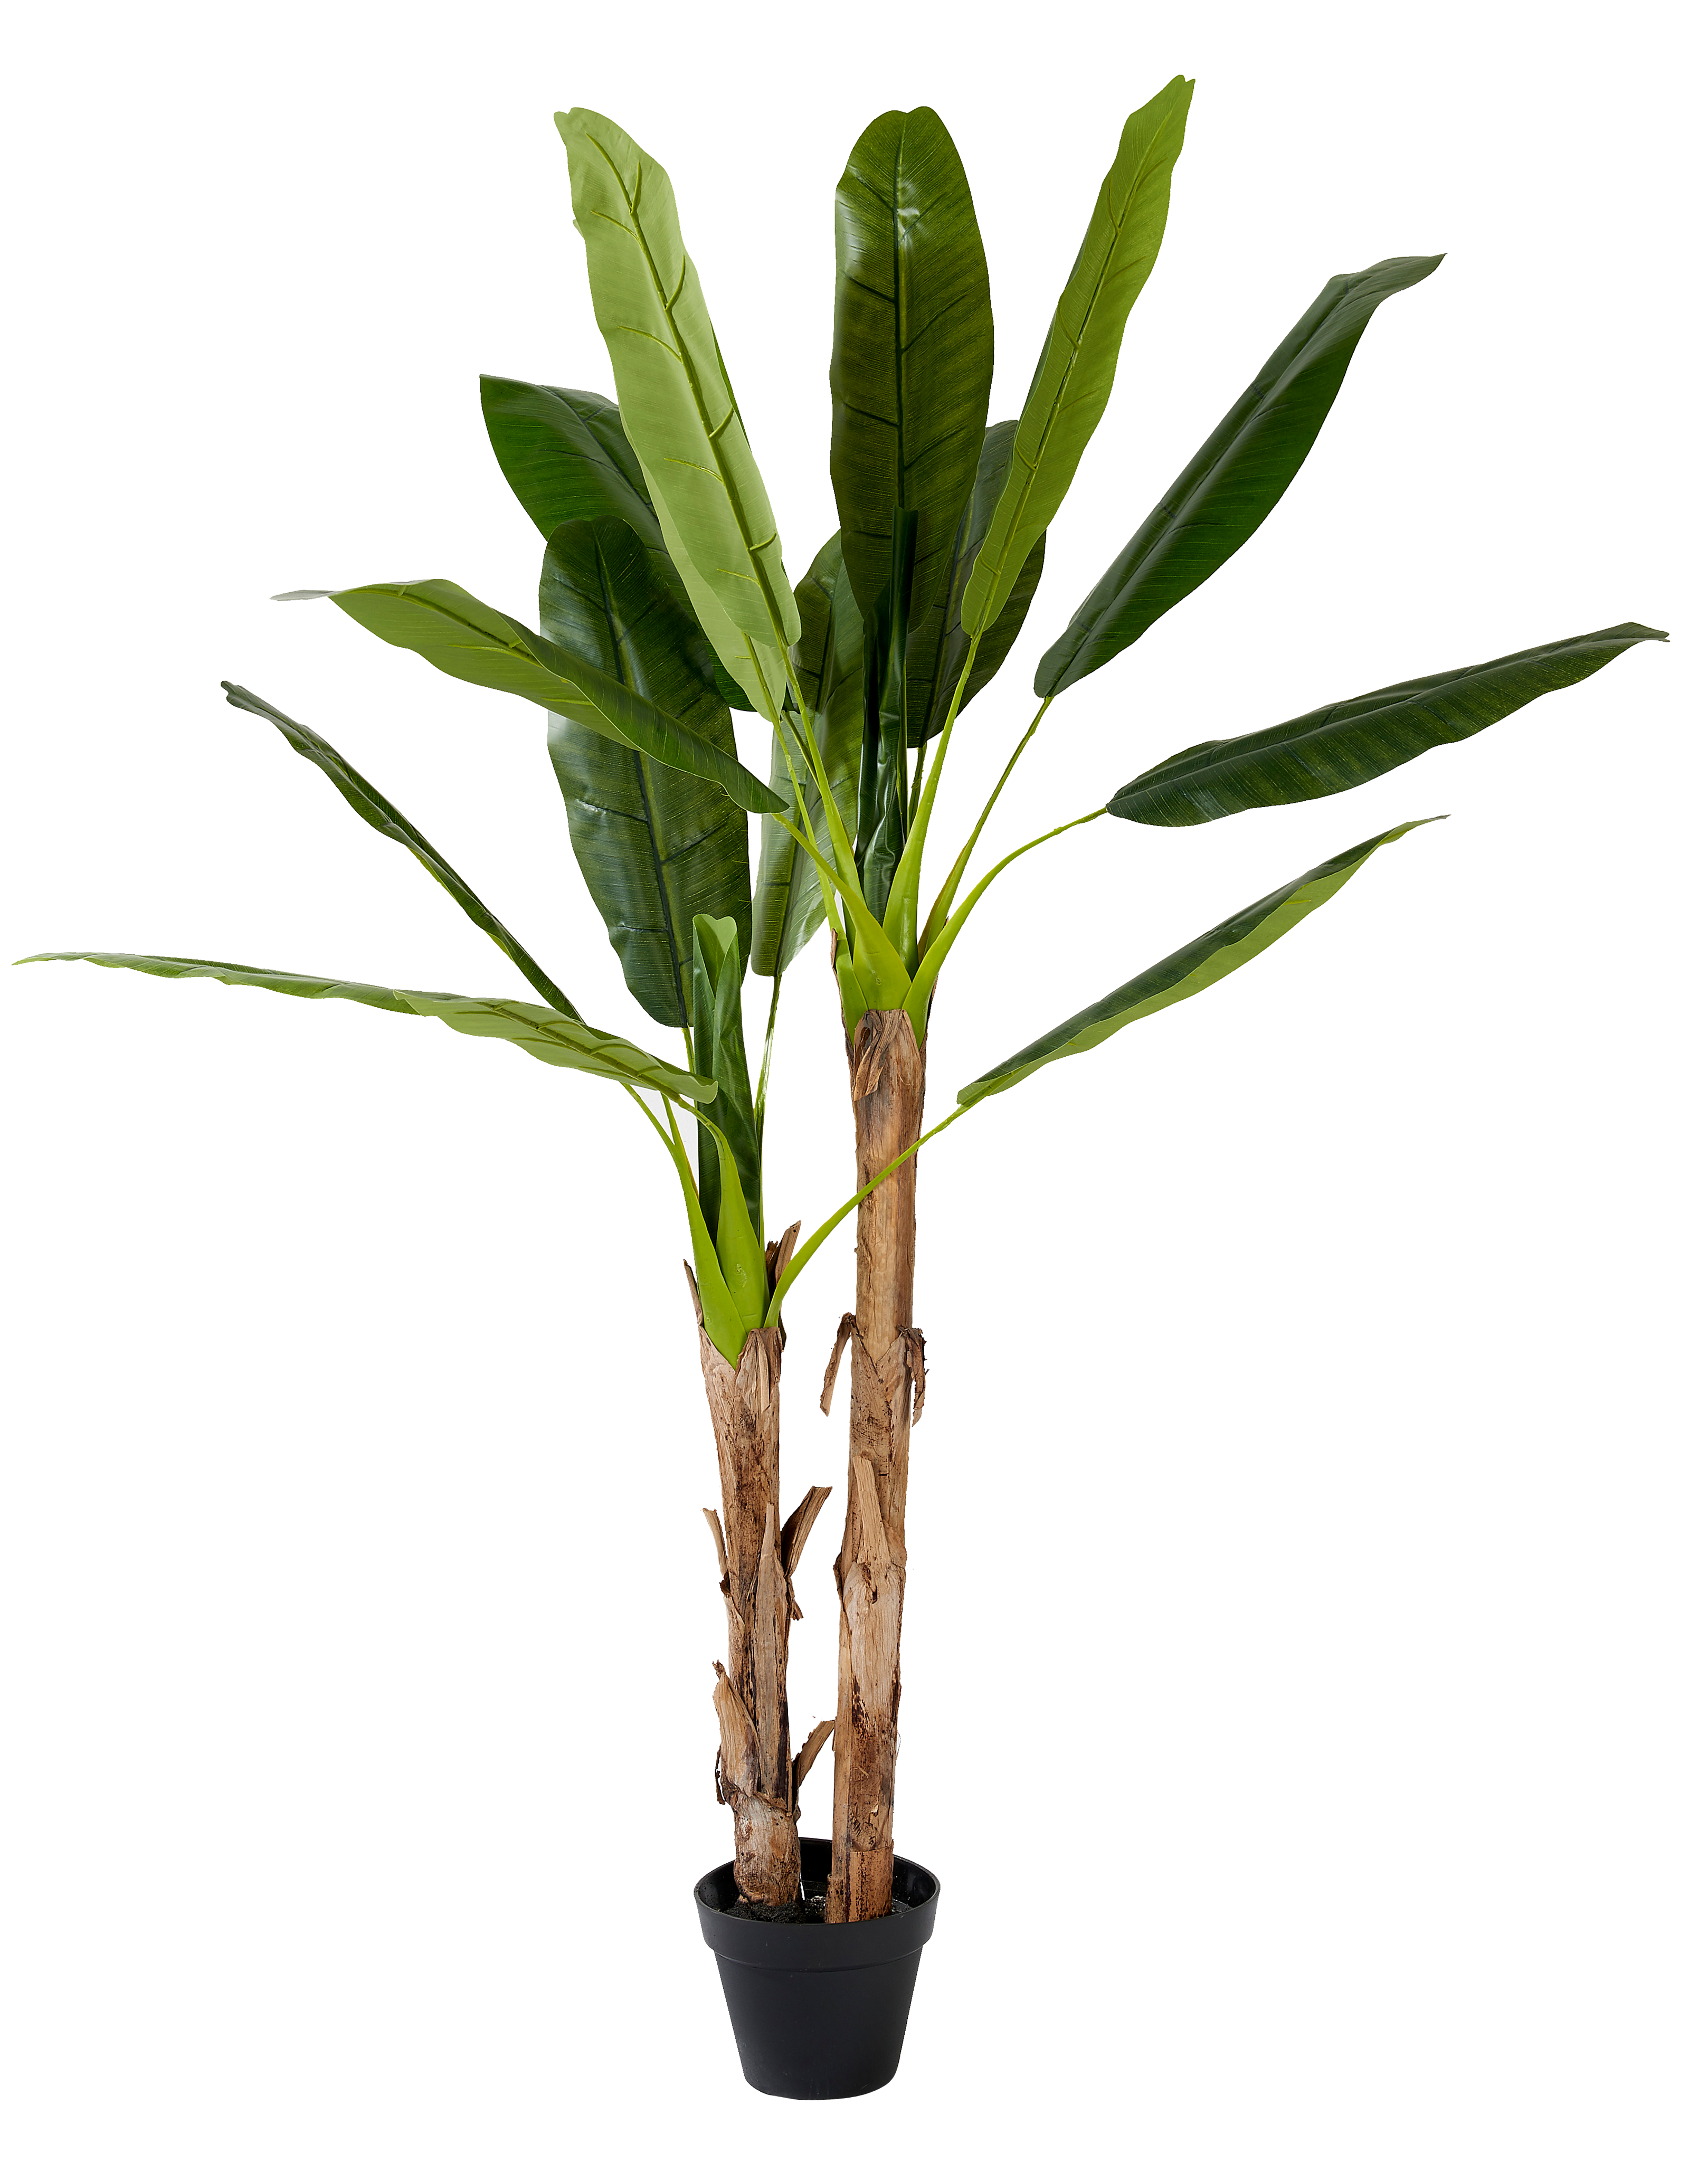 Planta Artificial Bananera Platanera - Compra Online